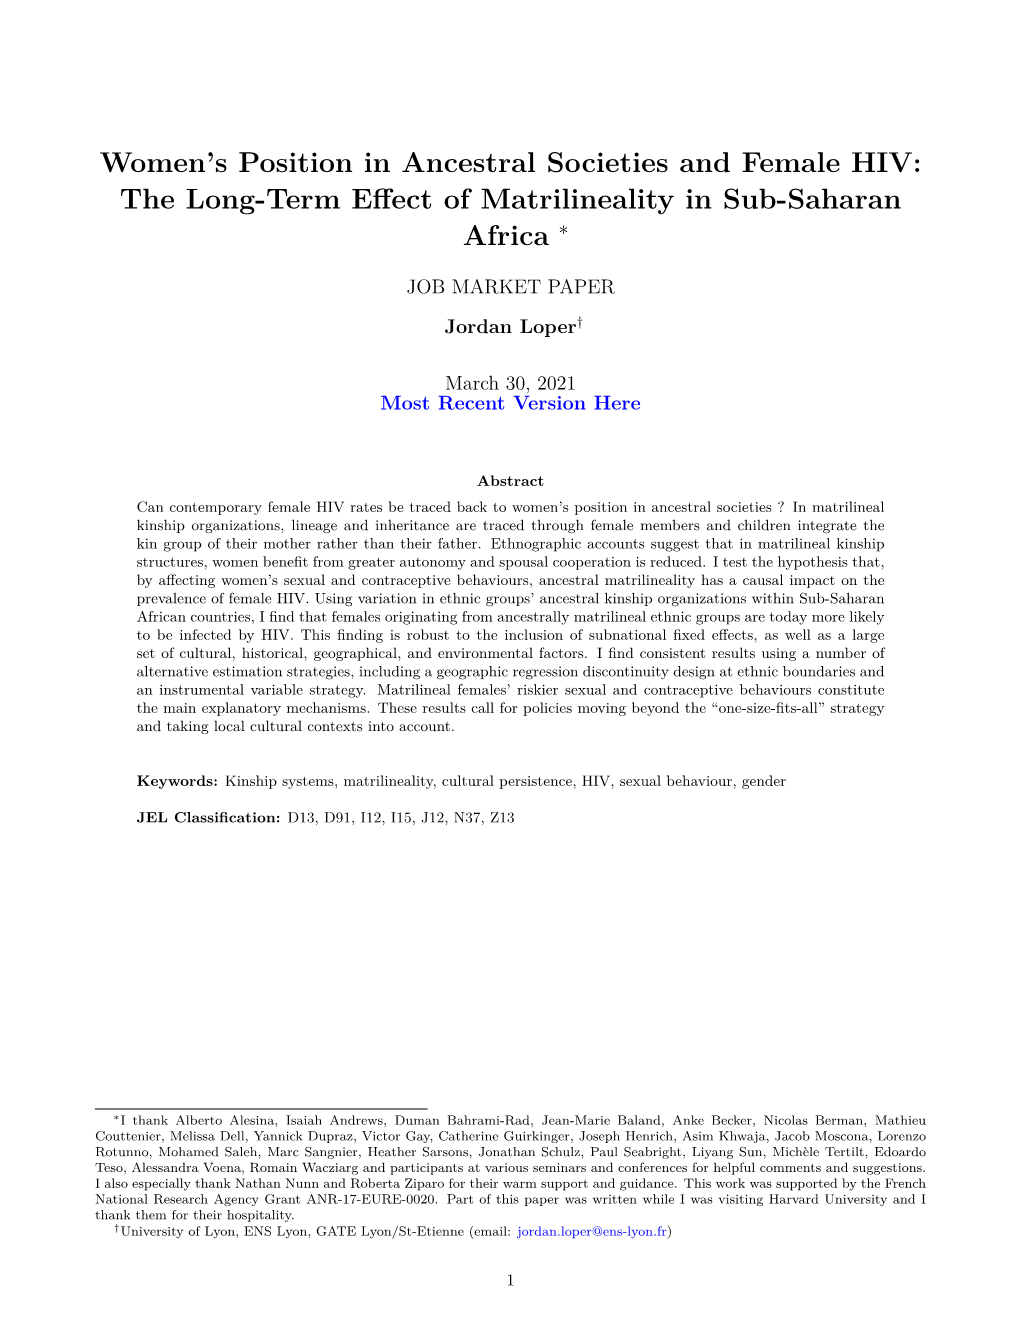 The Long-Term Effect of Matrilineality in Sub-Saharan Africa